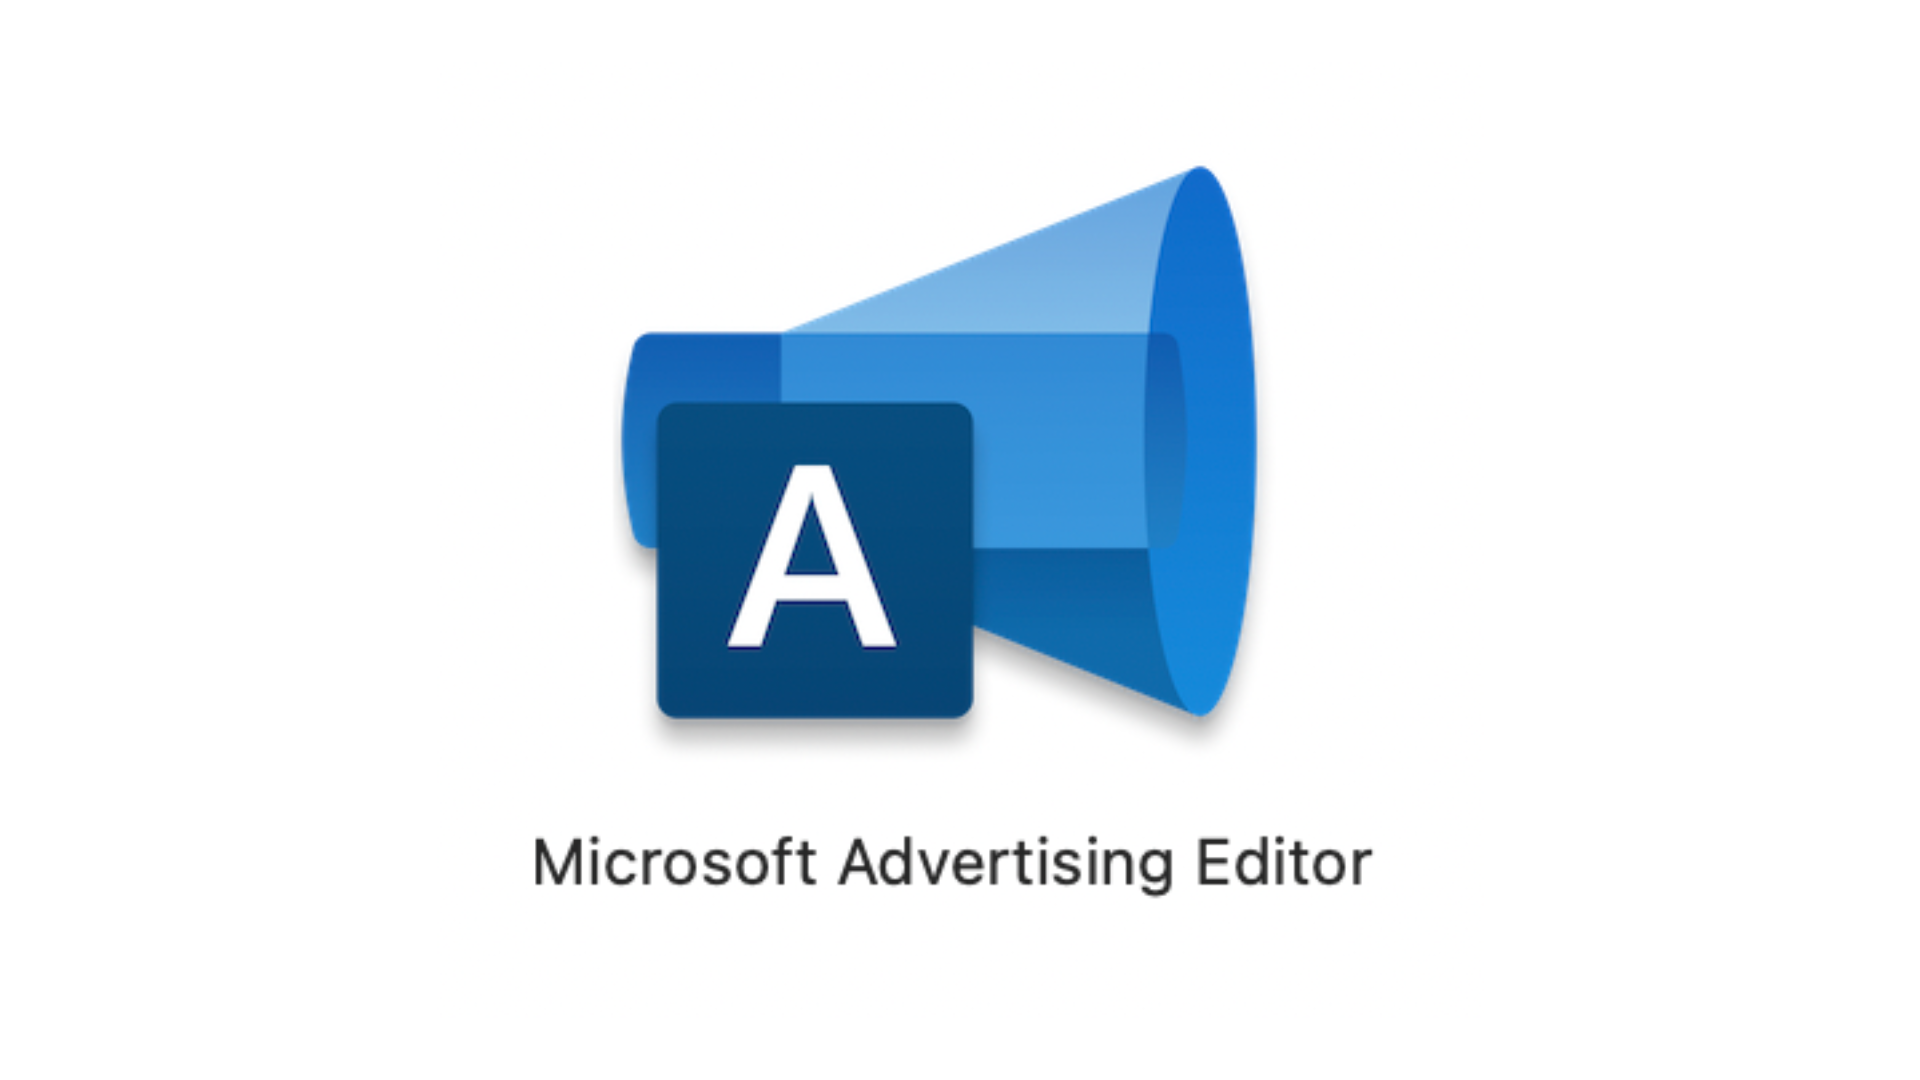 Microsoft Advertising Editor